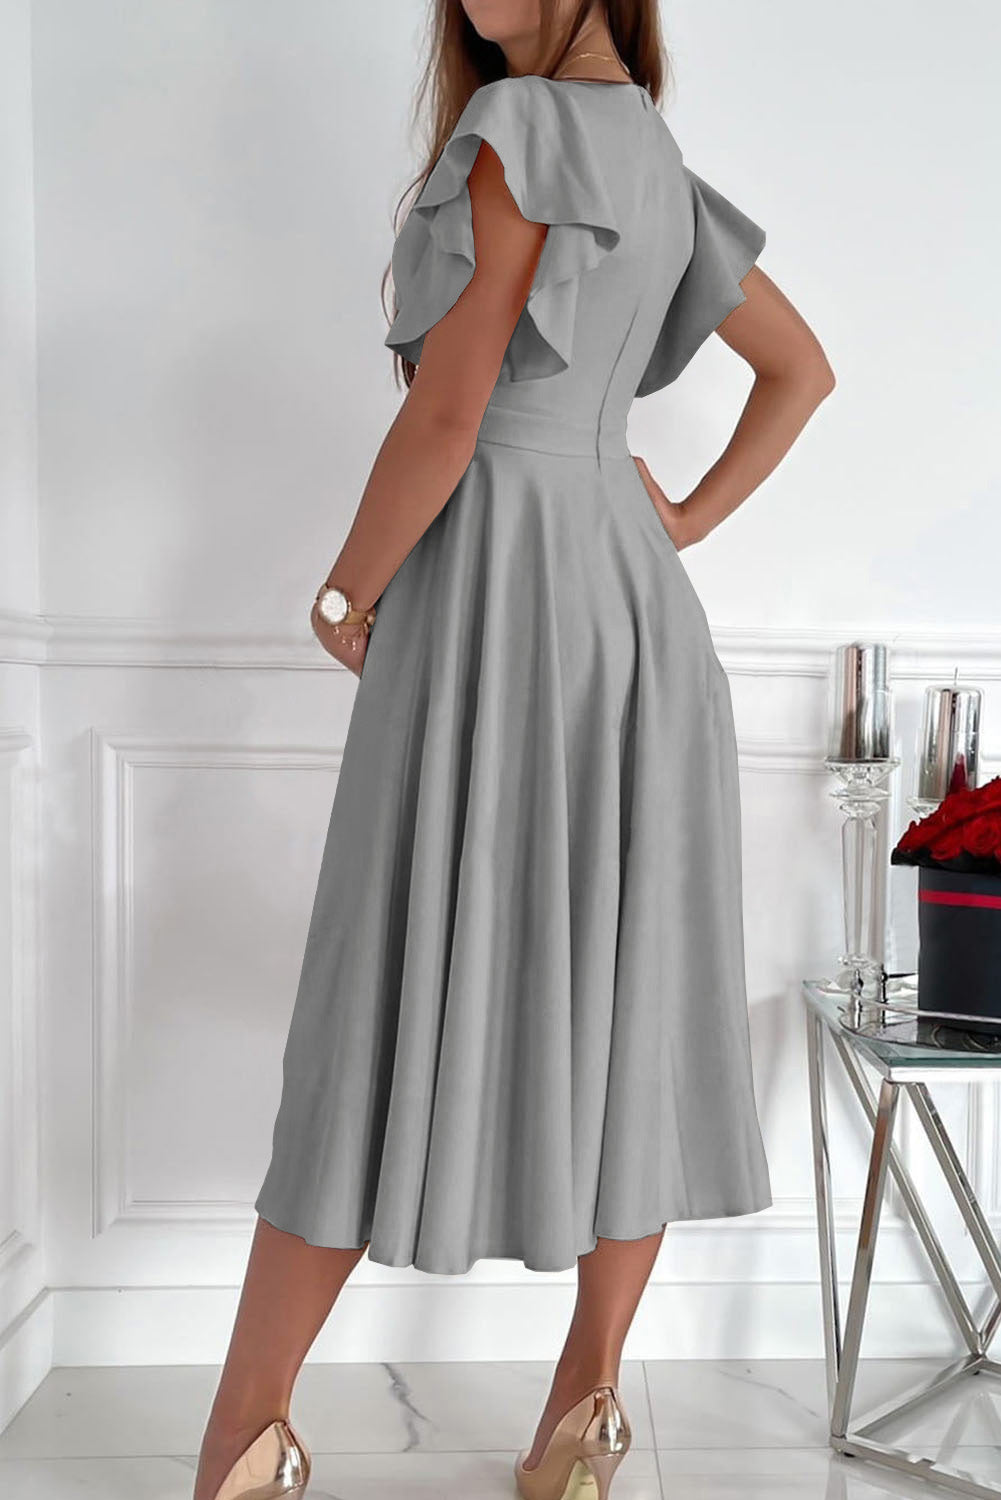 LC6110363-11-S, LC6110363-11-M, LC6110363-11-L, LC6110363-11-XL, LC6110363-11-2XL, Gray Womens V Neck Ruffle Sleeve Wrap Dress Midi Dress Cocktail Party Dress